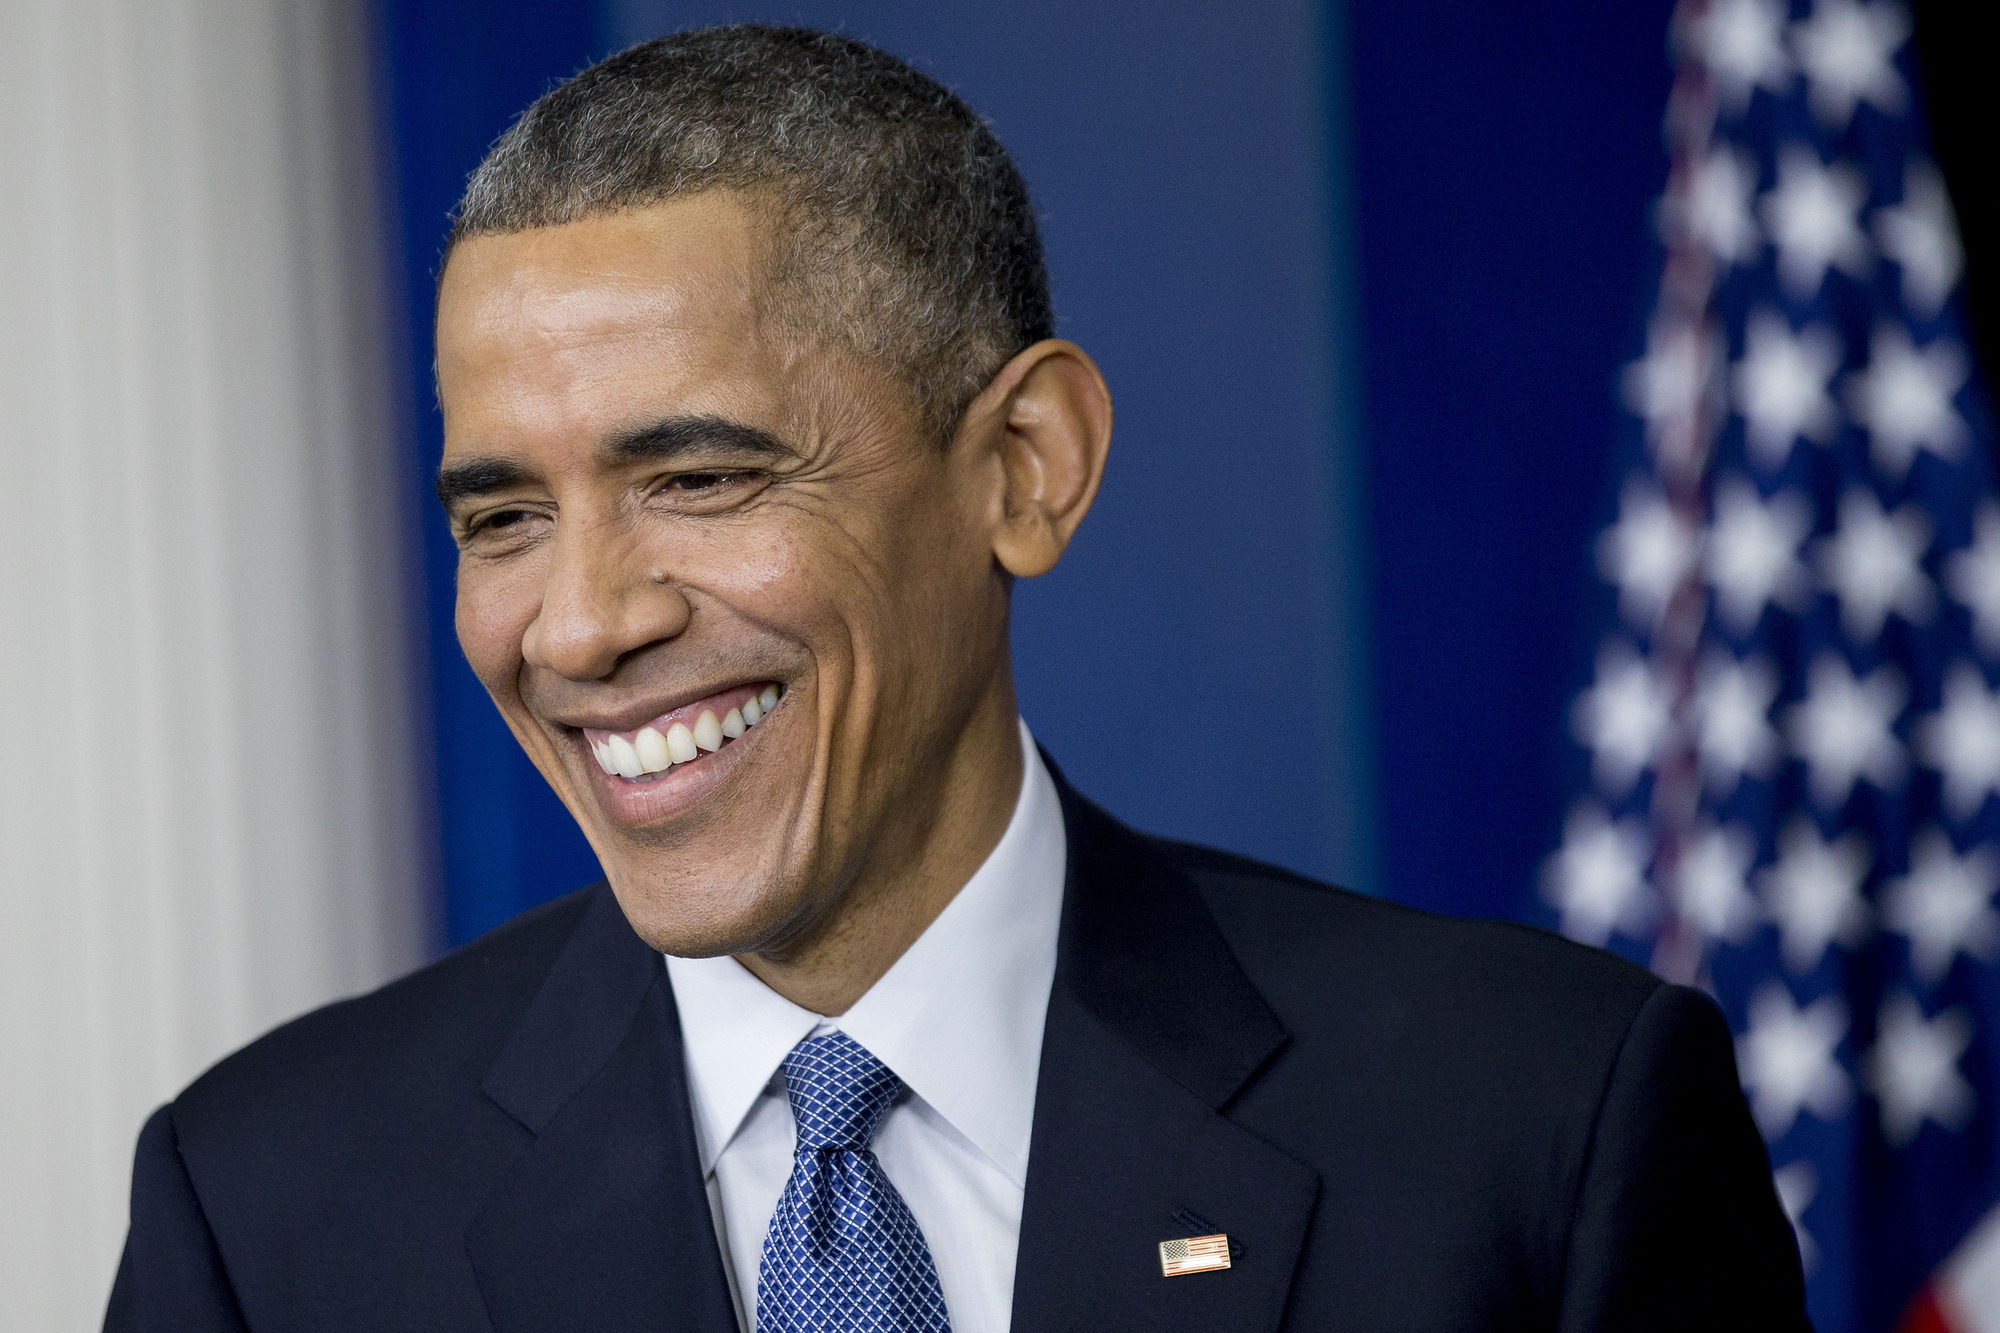 Barack Obama | Photo Credit: Andrew Harrer